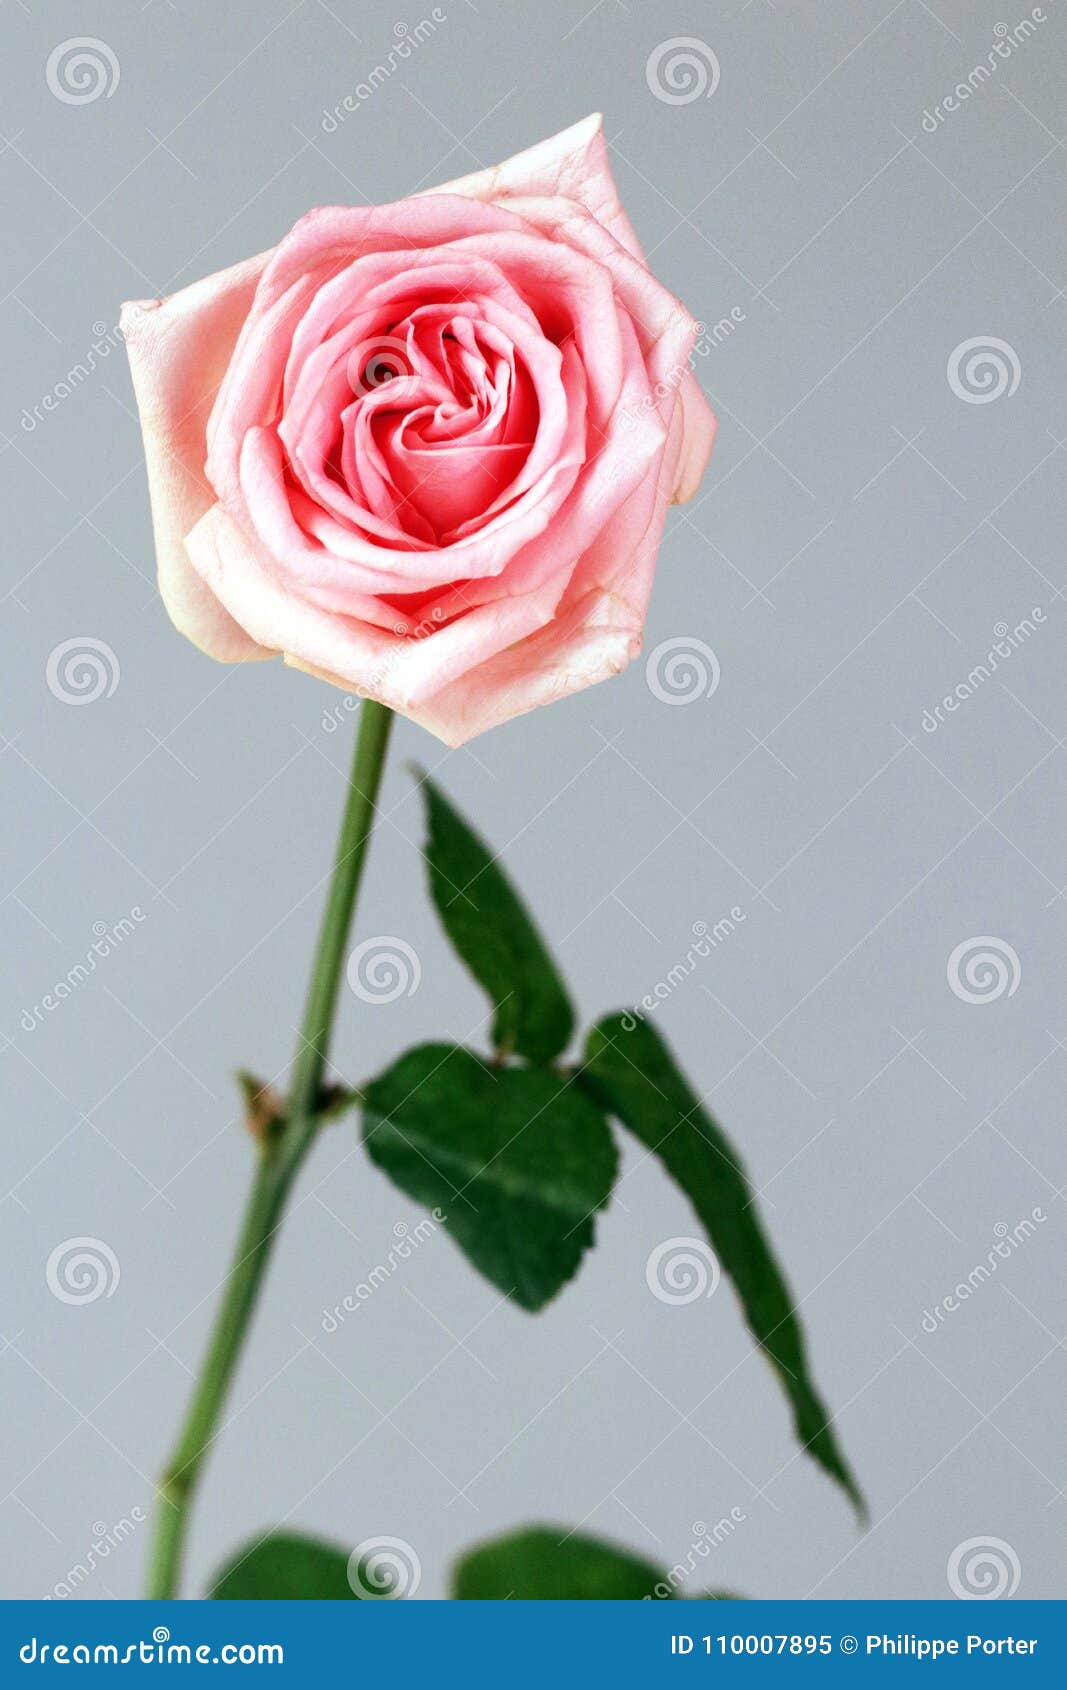 pink rose love  gratitude admiration joy deep love background